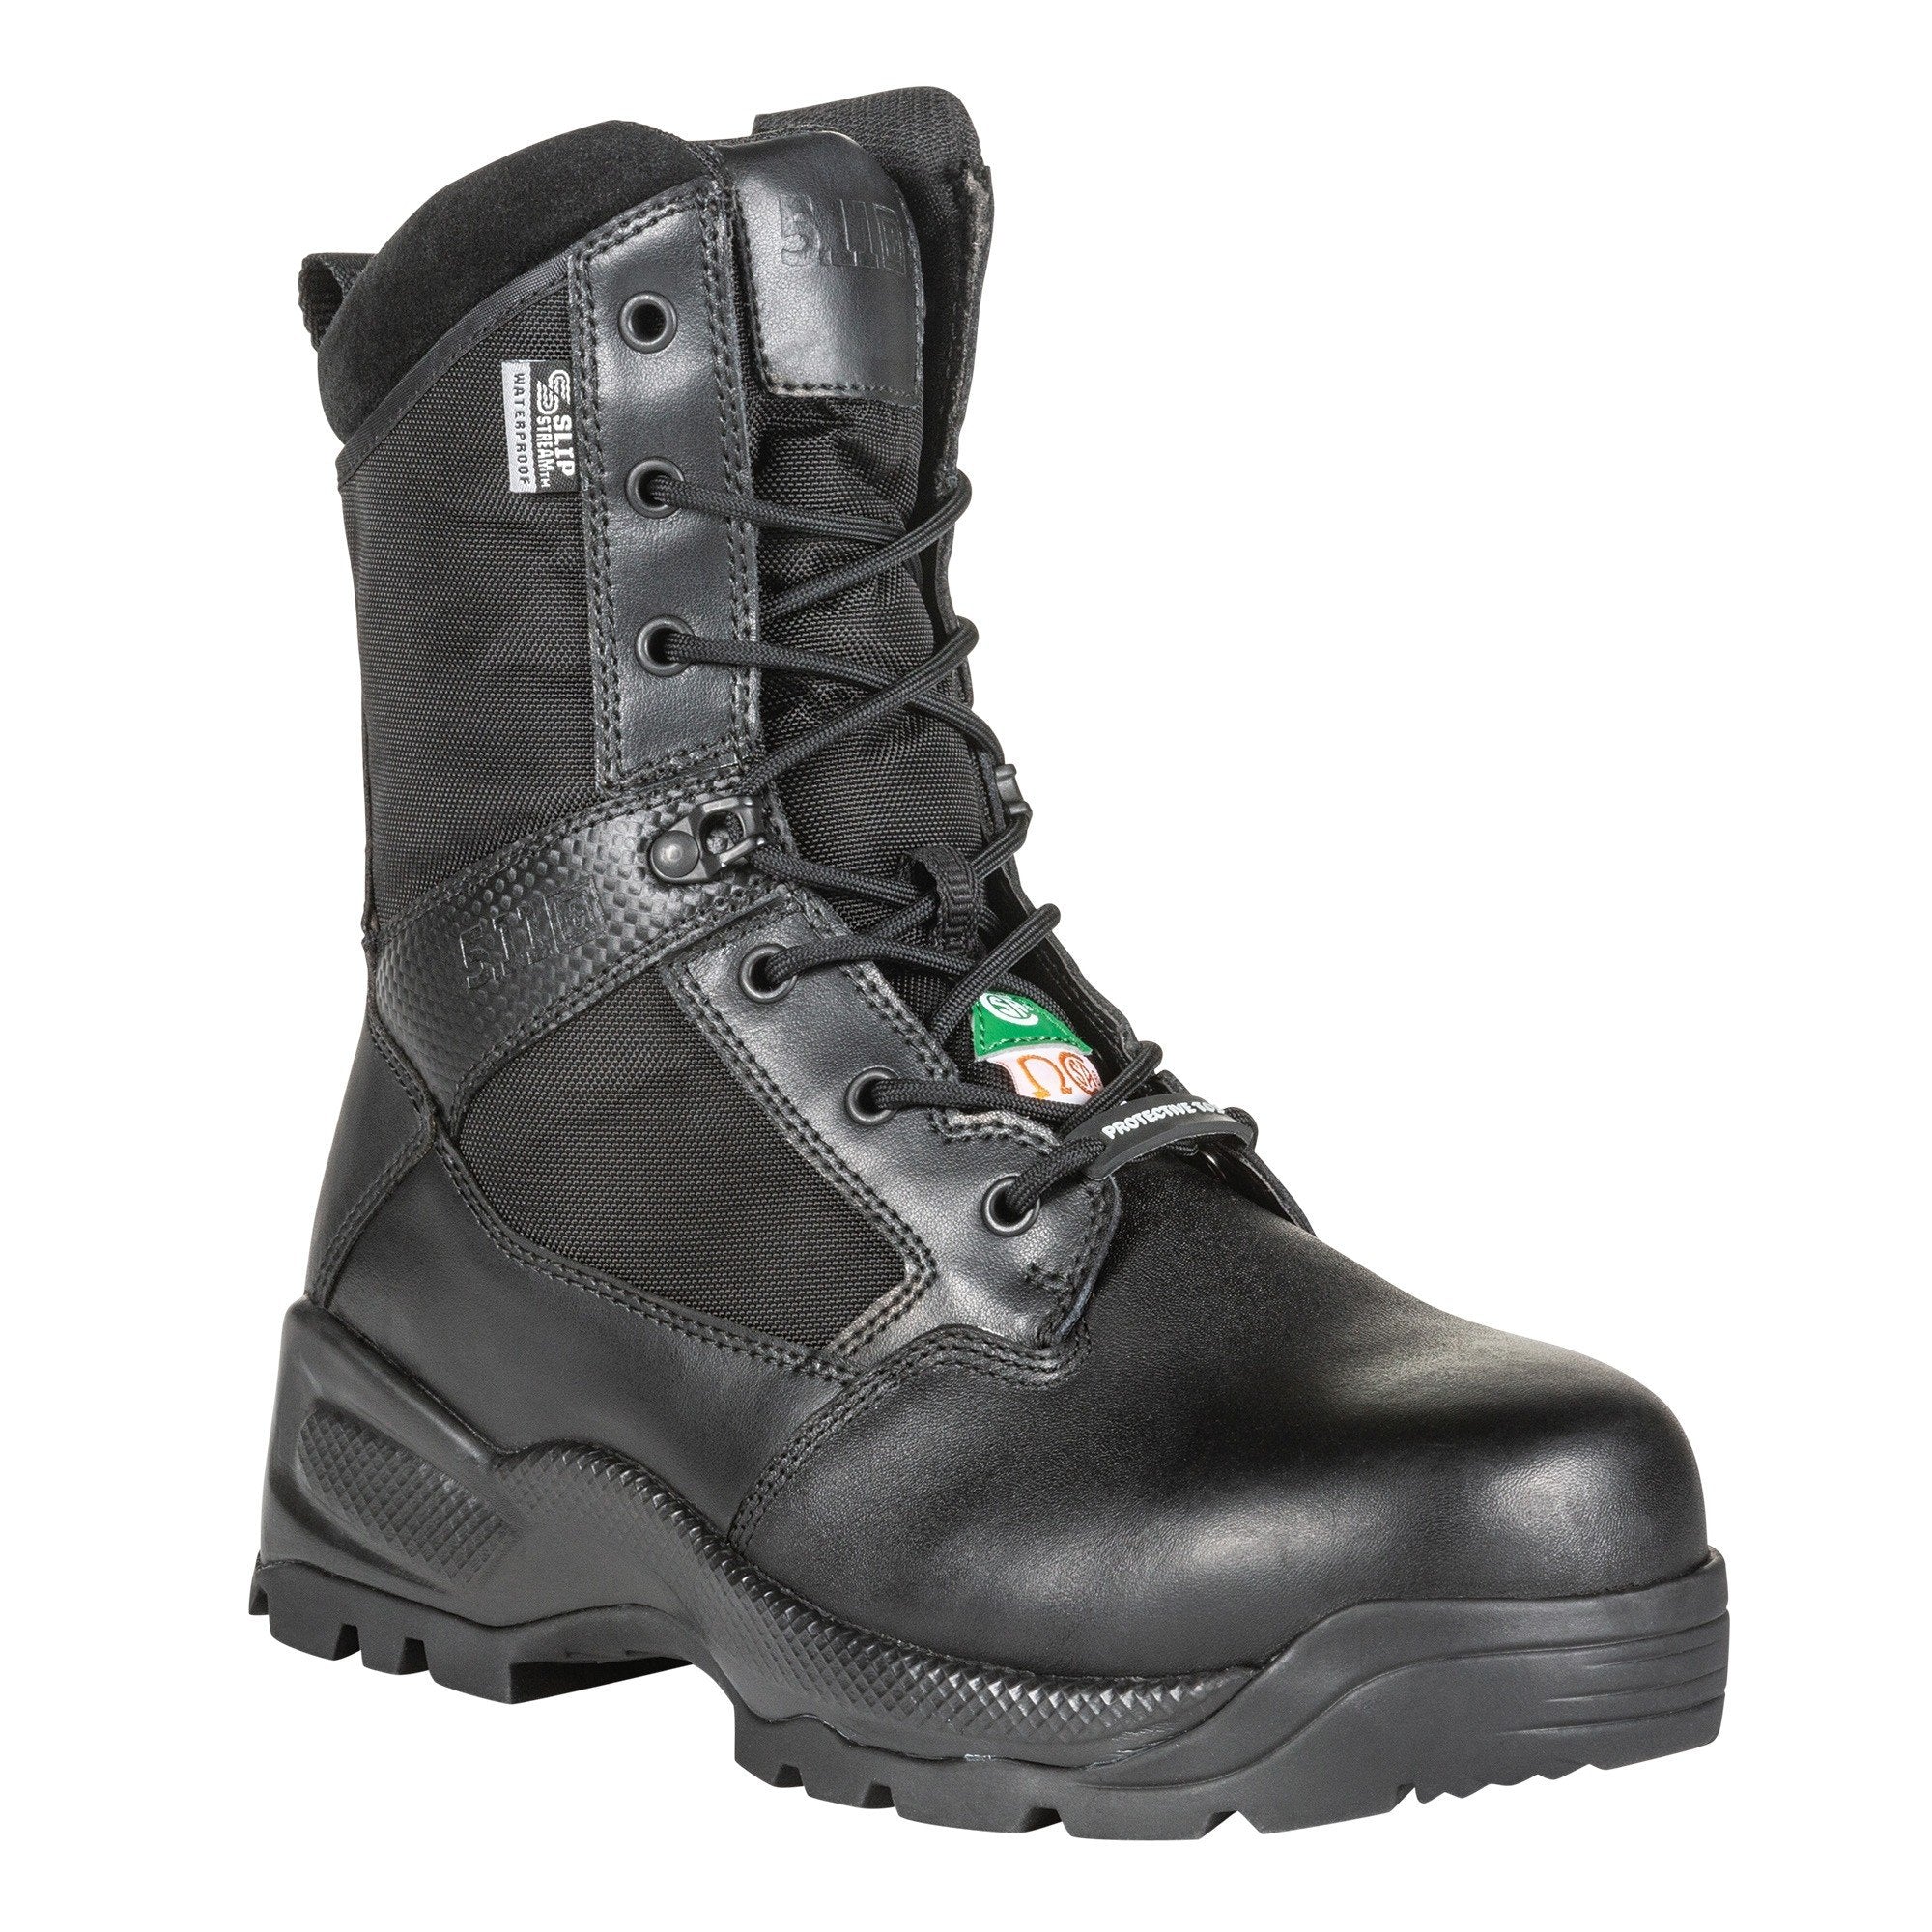 5.11 Tactical ATAC 8 Inches Shield 2.0 Side Zip Boots Black Footwear 5.11 Tactical 4.0 US Regular Tactical Gear Supplier Tactical Distributors Australia